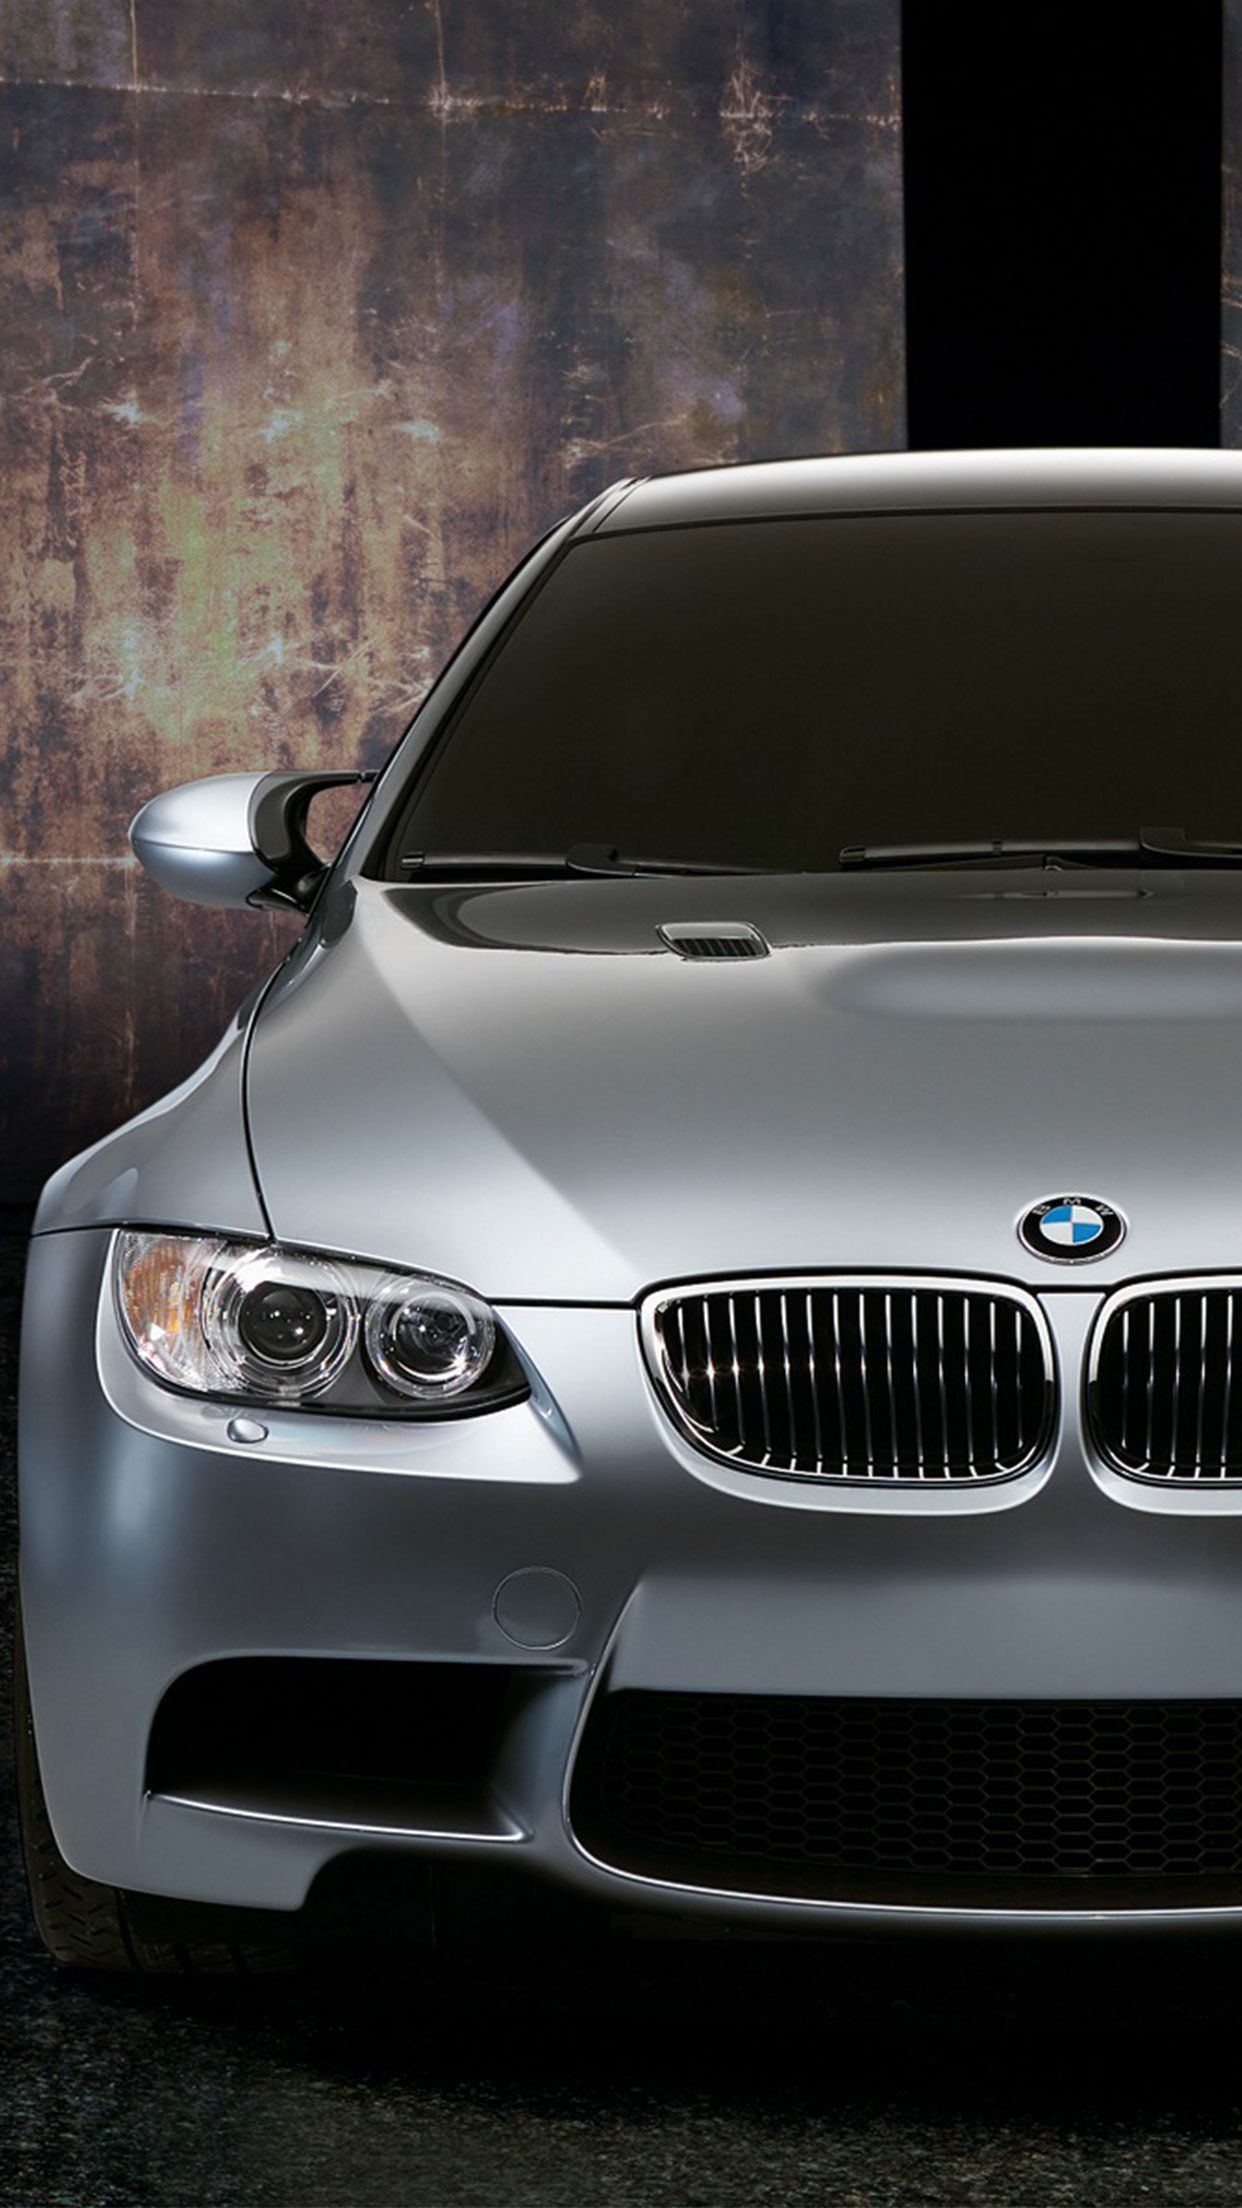 Grey BMW car Wallpaper #iPhone #android #bmw #car #wallpaper more